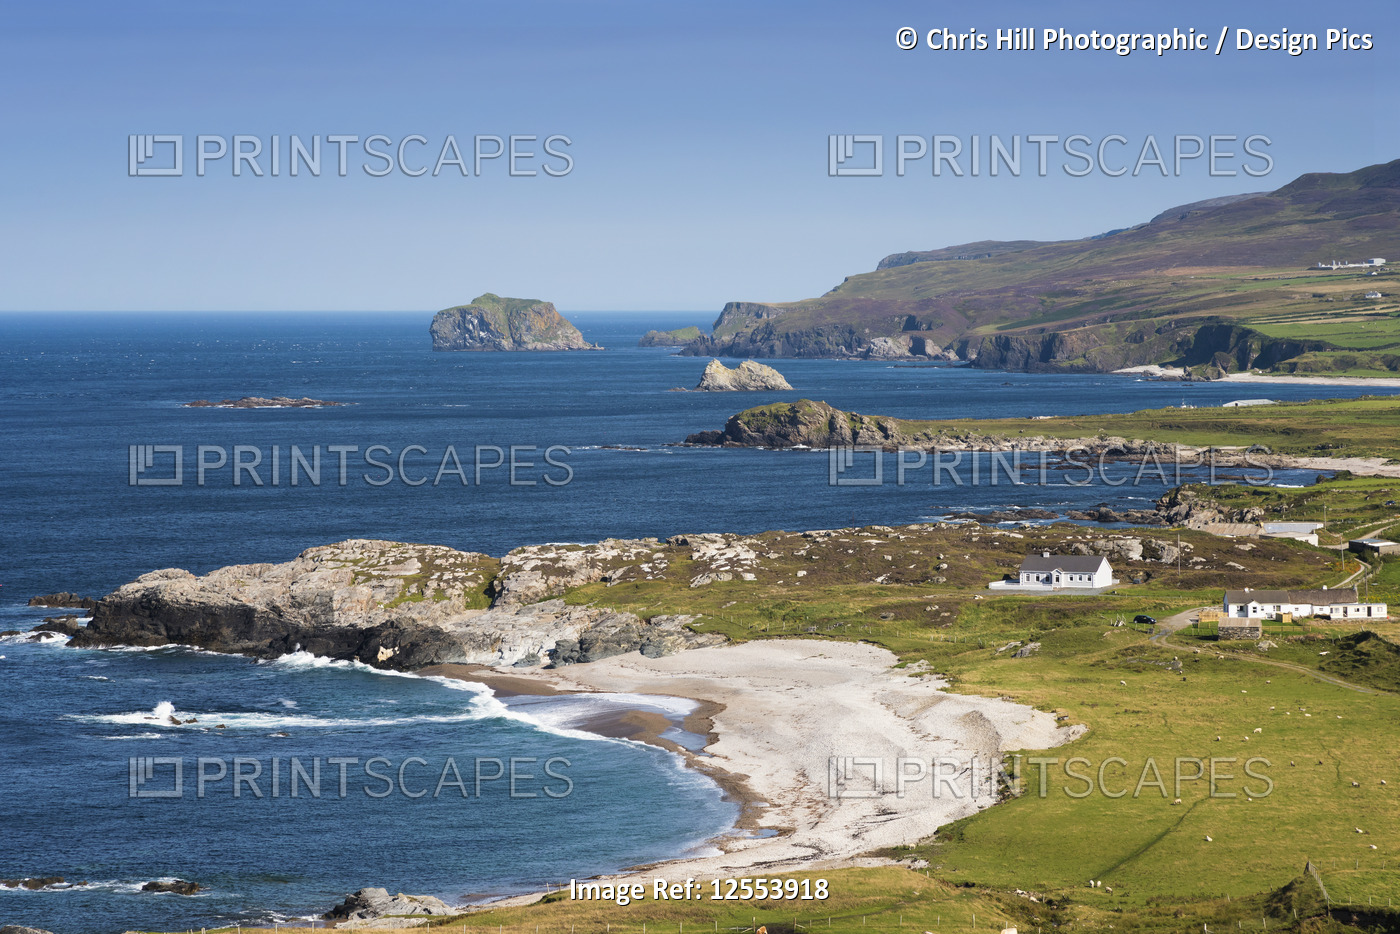 Beach and cliffs along the coastline of Ireland; Ireland